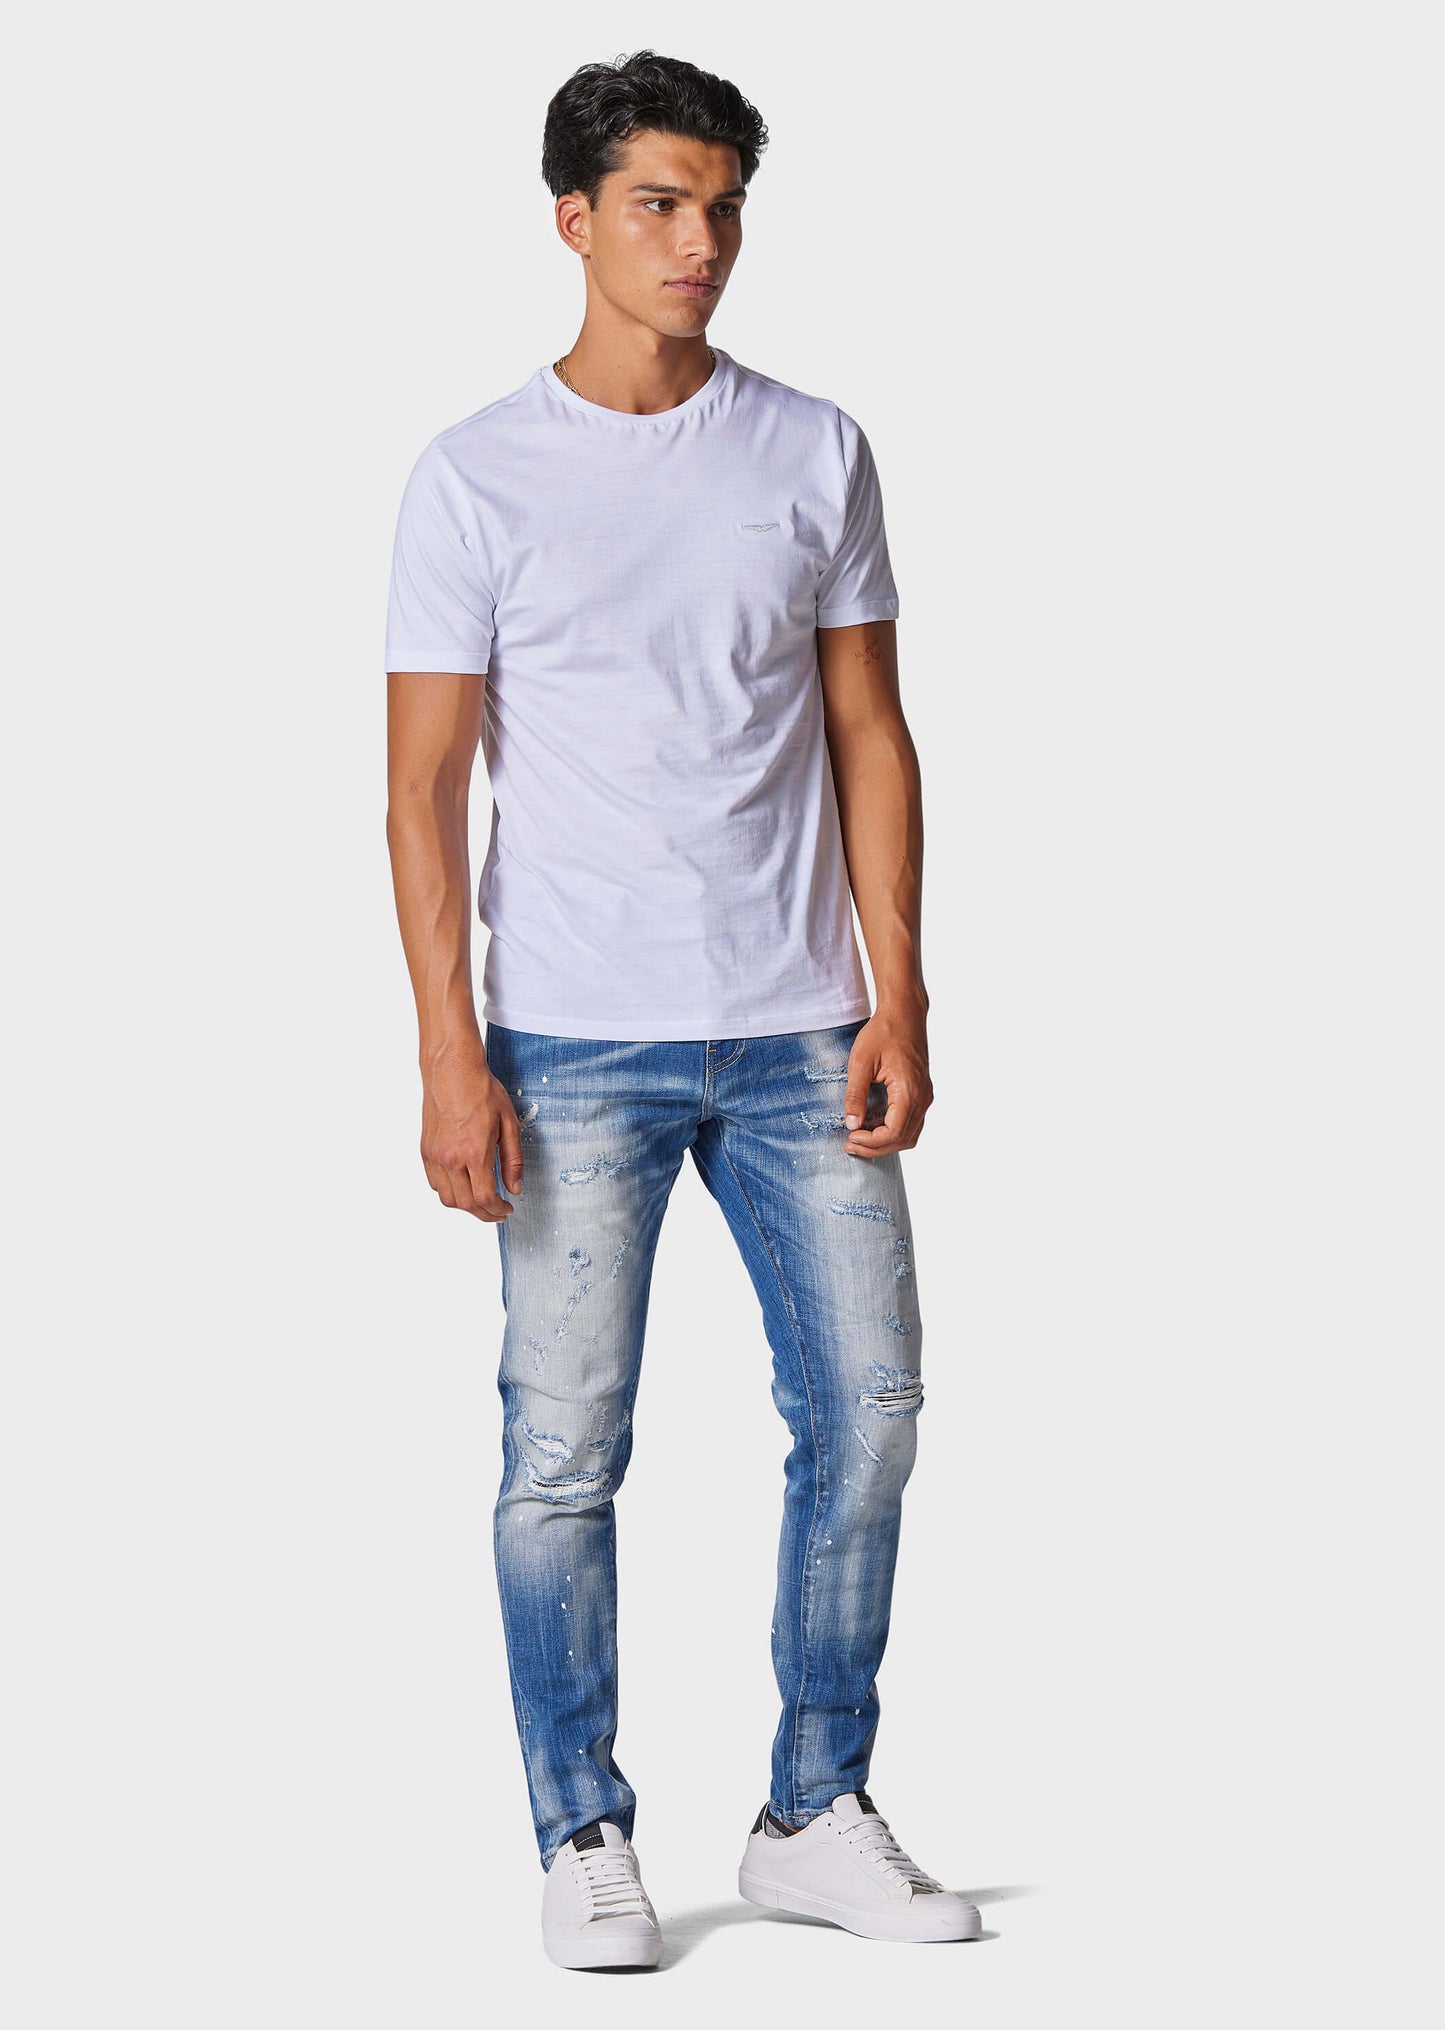 Deniro LAT 881 Slim Fit Jeans